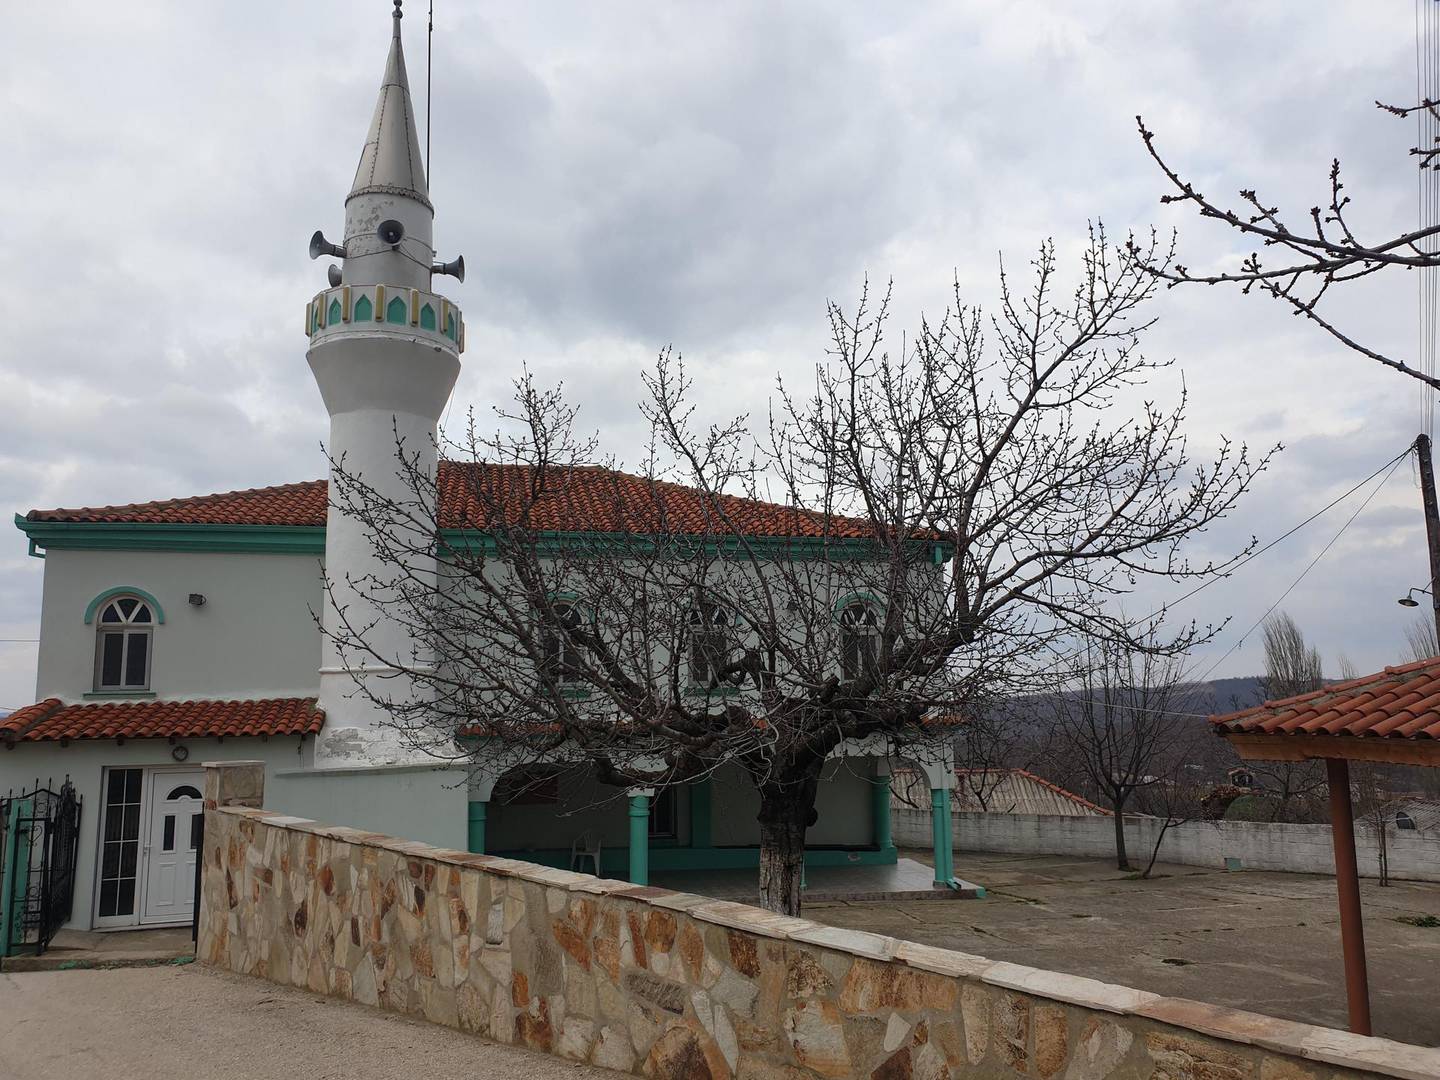 The mosque in Sidiro, Greece. Paul Peachey for The National